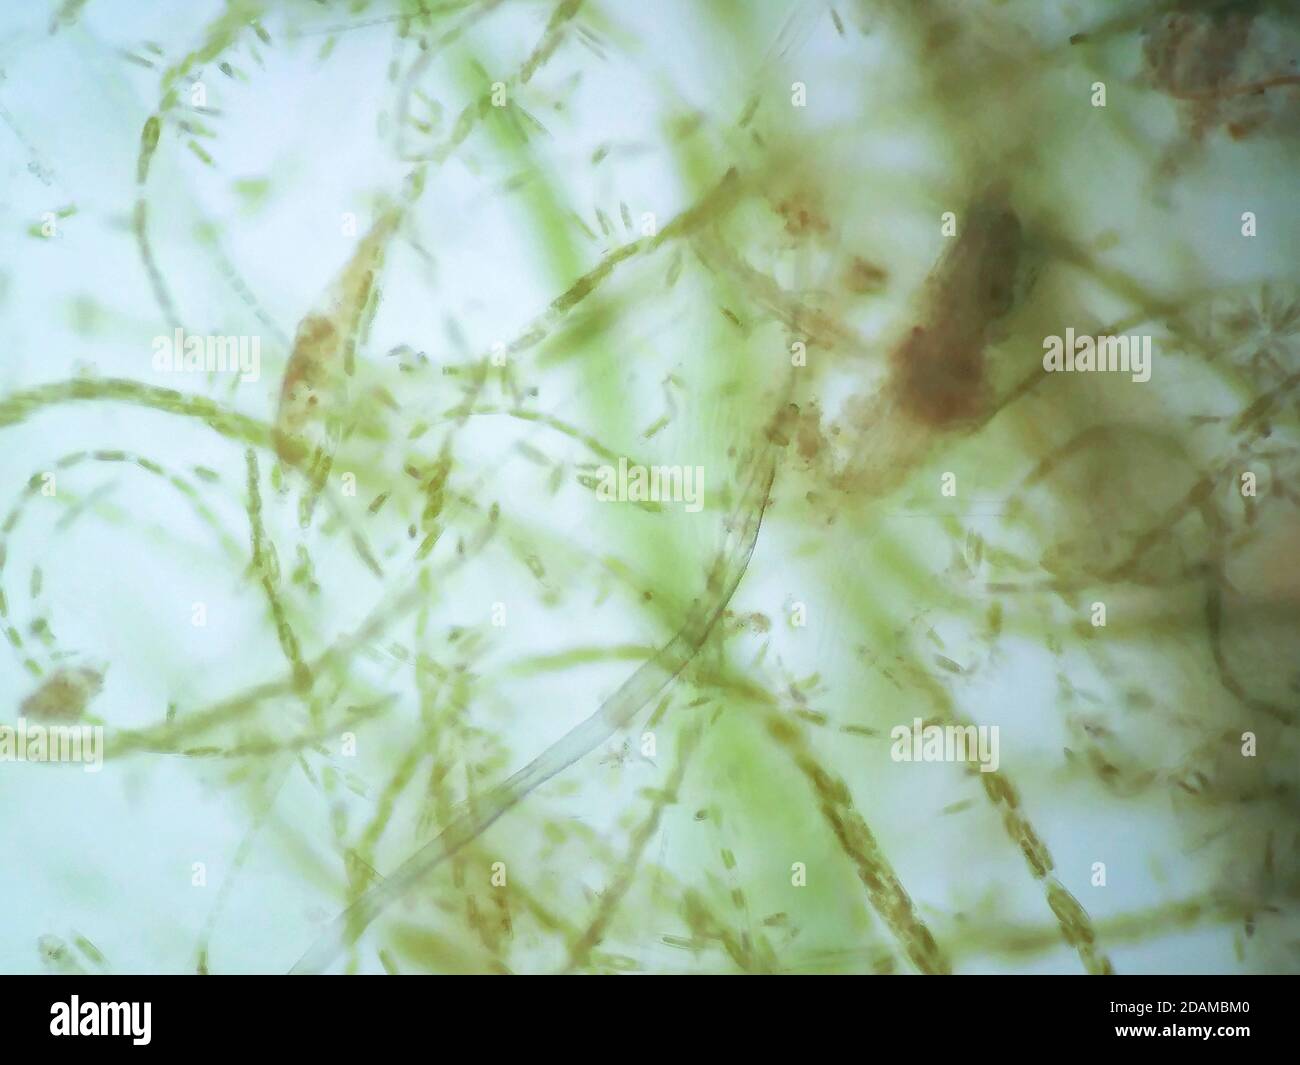 Algues filamenteuses, micrographe léger. Les algues filamenteuses sont des cellules d'algues simples qui forment de longues chaînes, fils ou filaments visibles. Banque D'Images